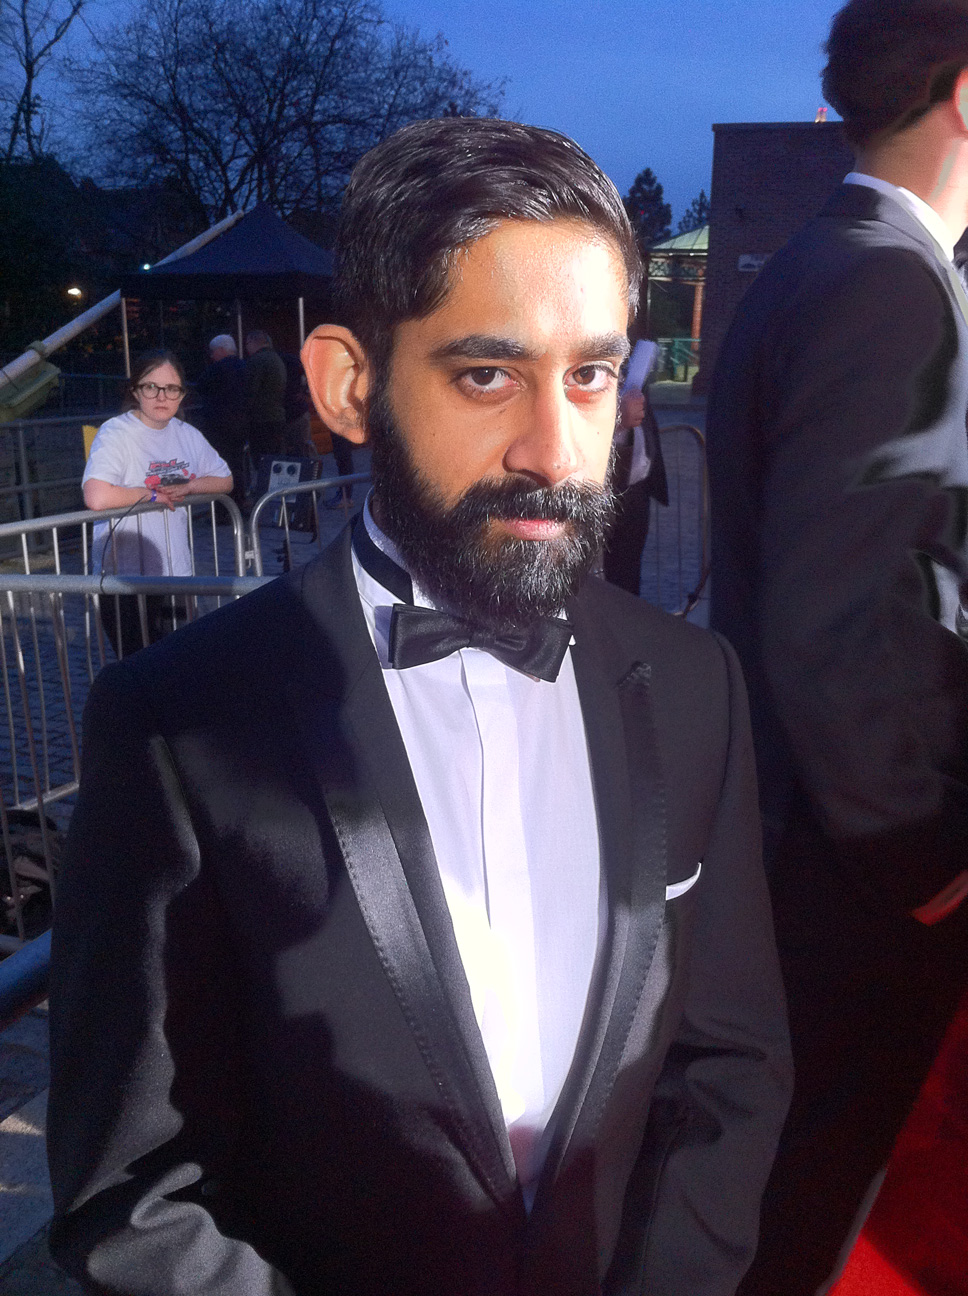  Manesh striking a pose on the red carpet on BAFTA night 